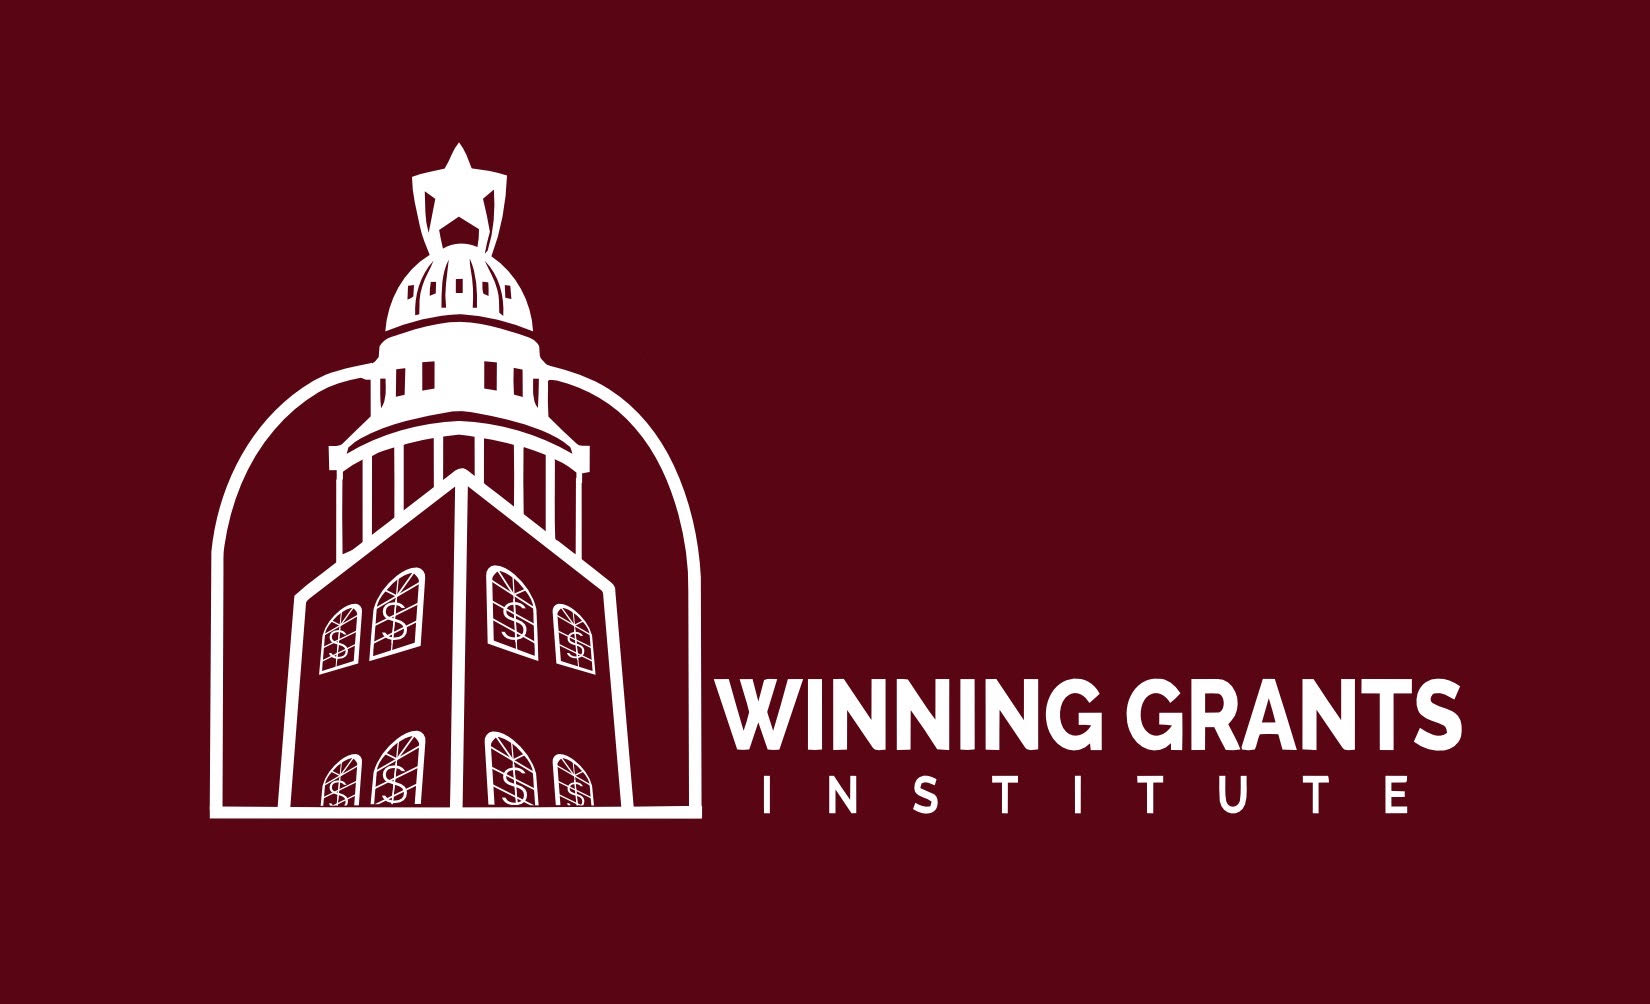 The Winning Grants Institute